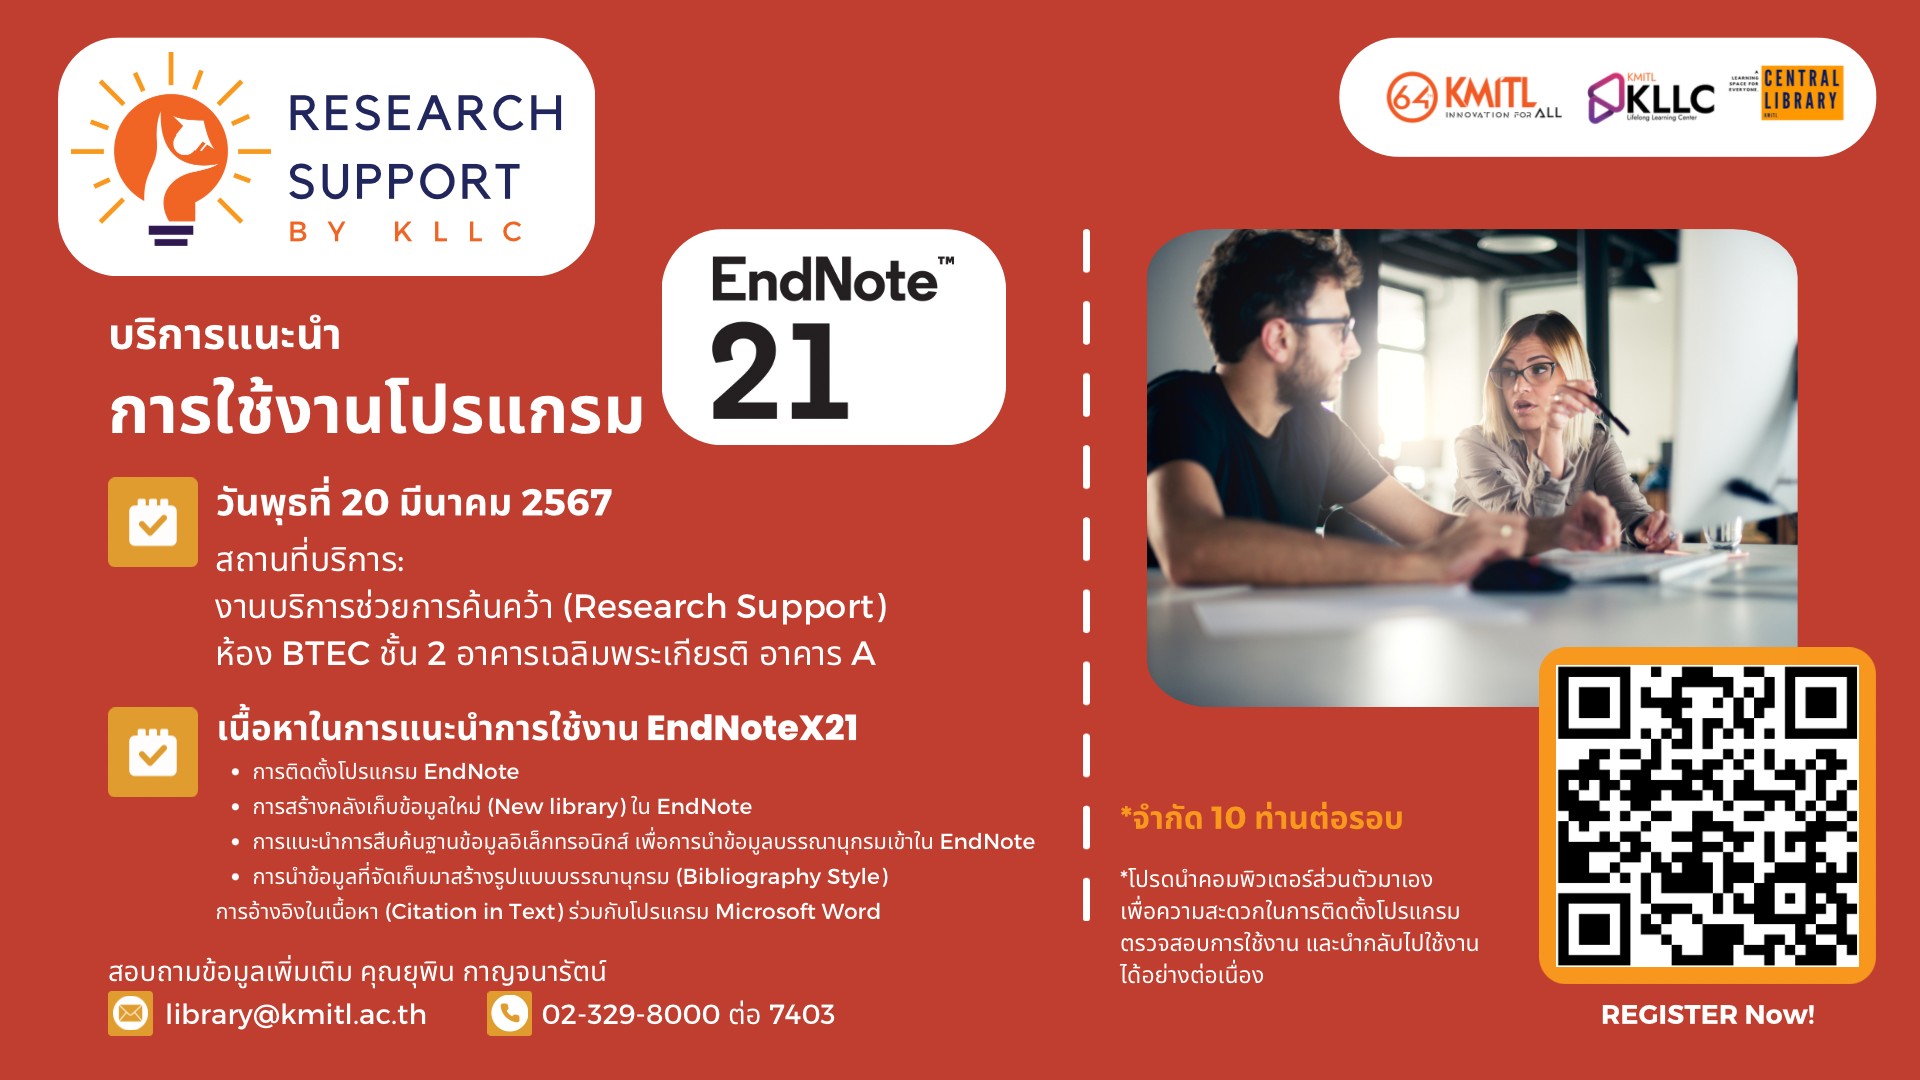 Research Support จัดบริการแนะนำ "การใช้งานโปรแกรม EndnoteX21